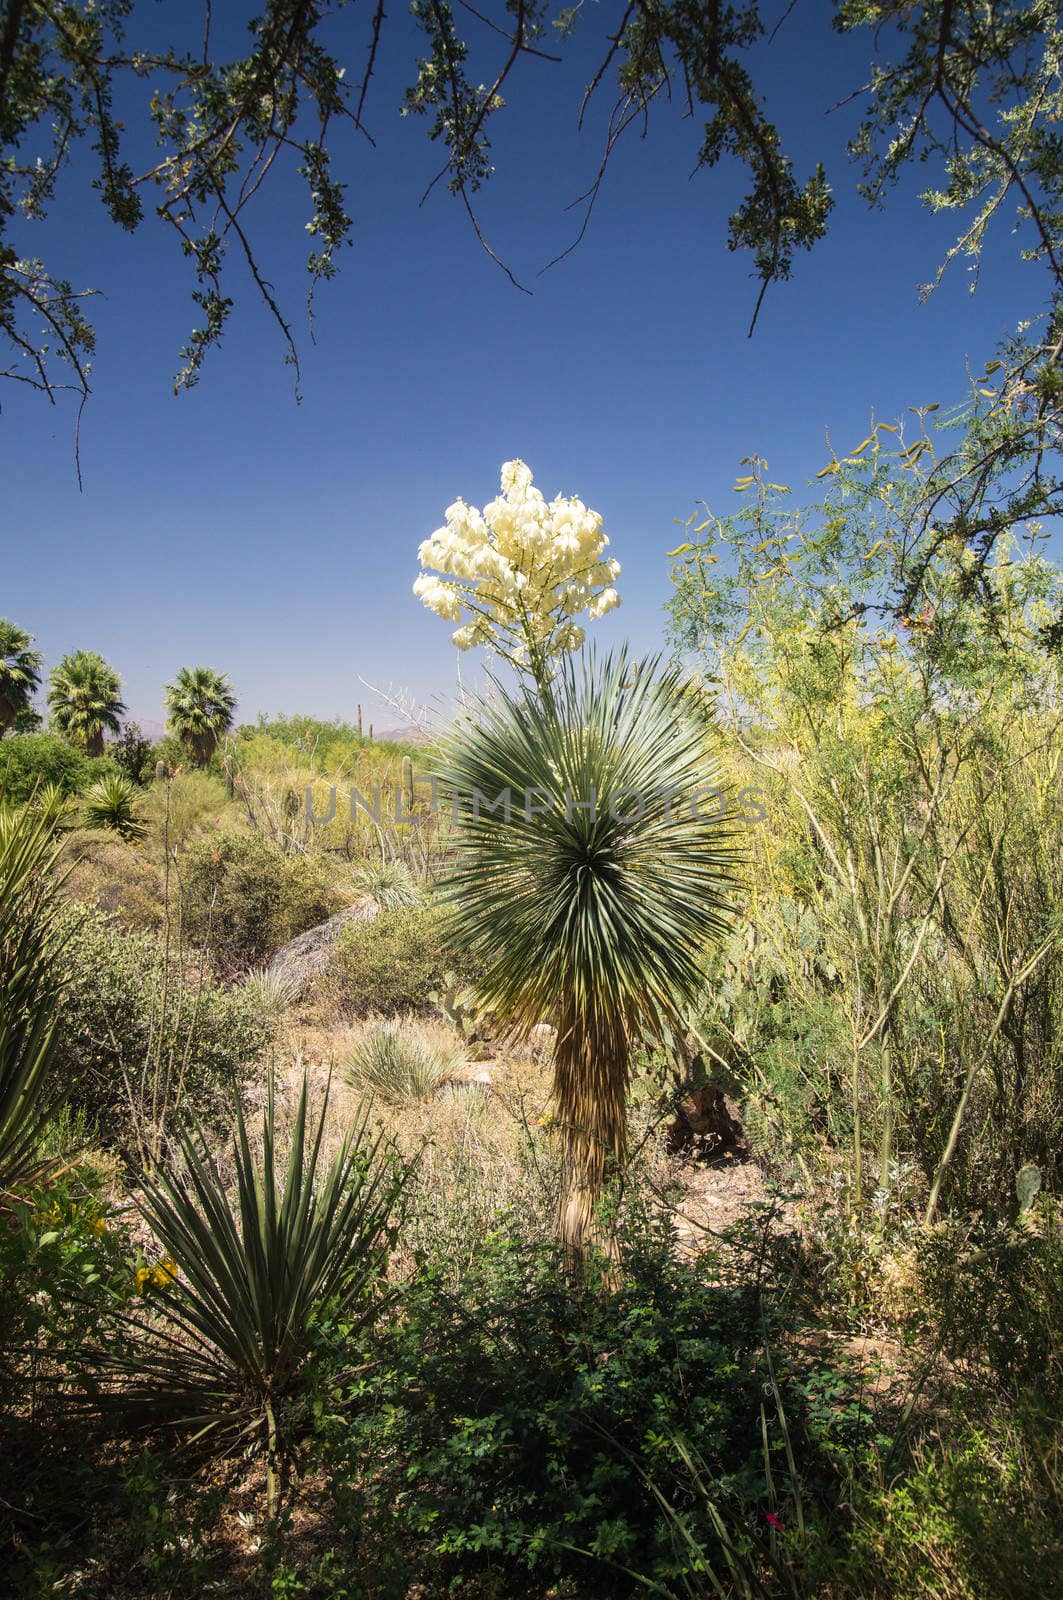 Flowering Yucca by emattil